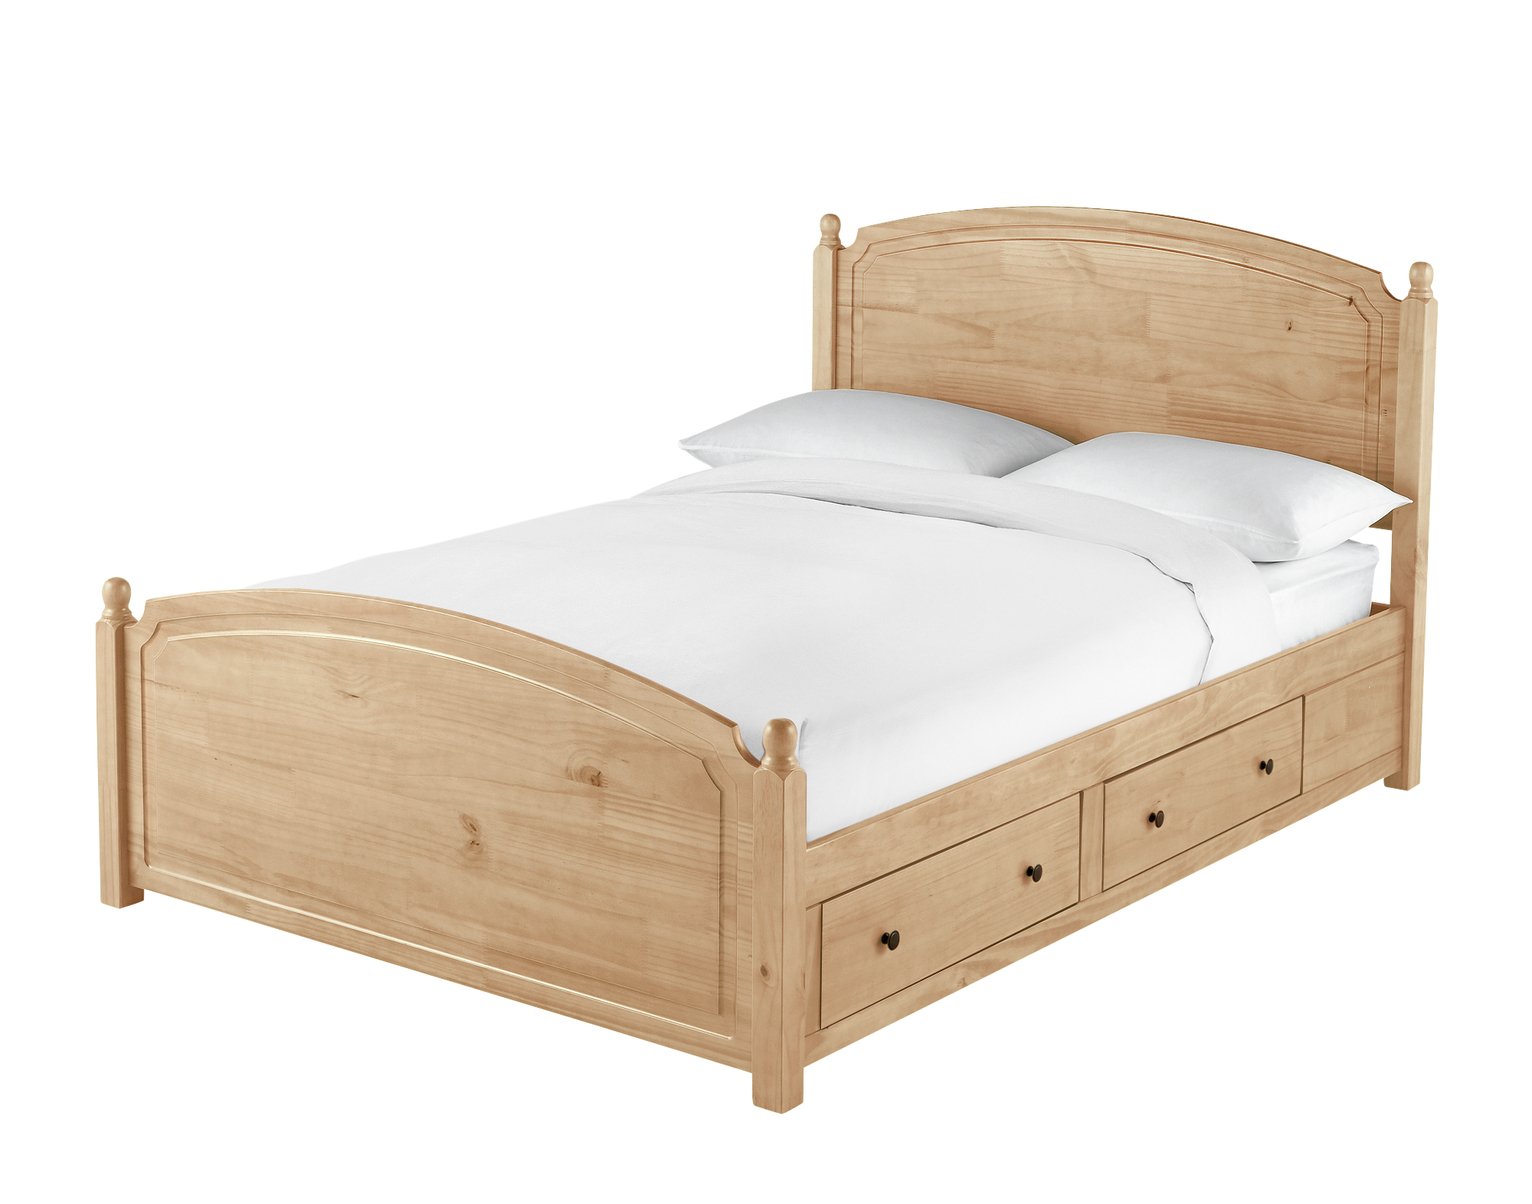 Argos Home Emberton Kingsize Wooden Bed Frame - Pine